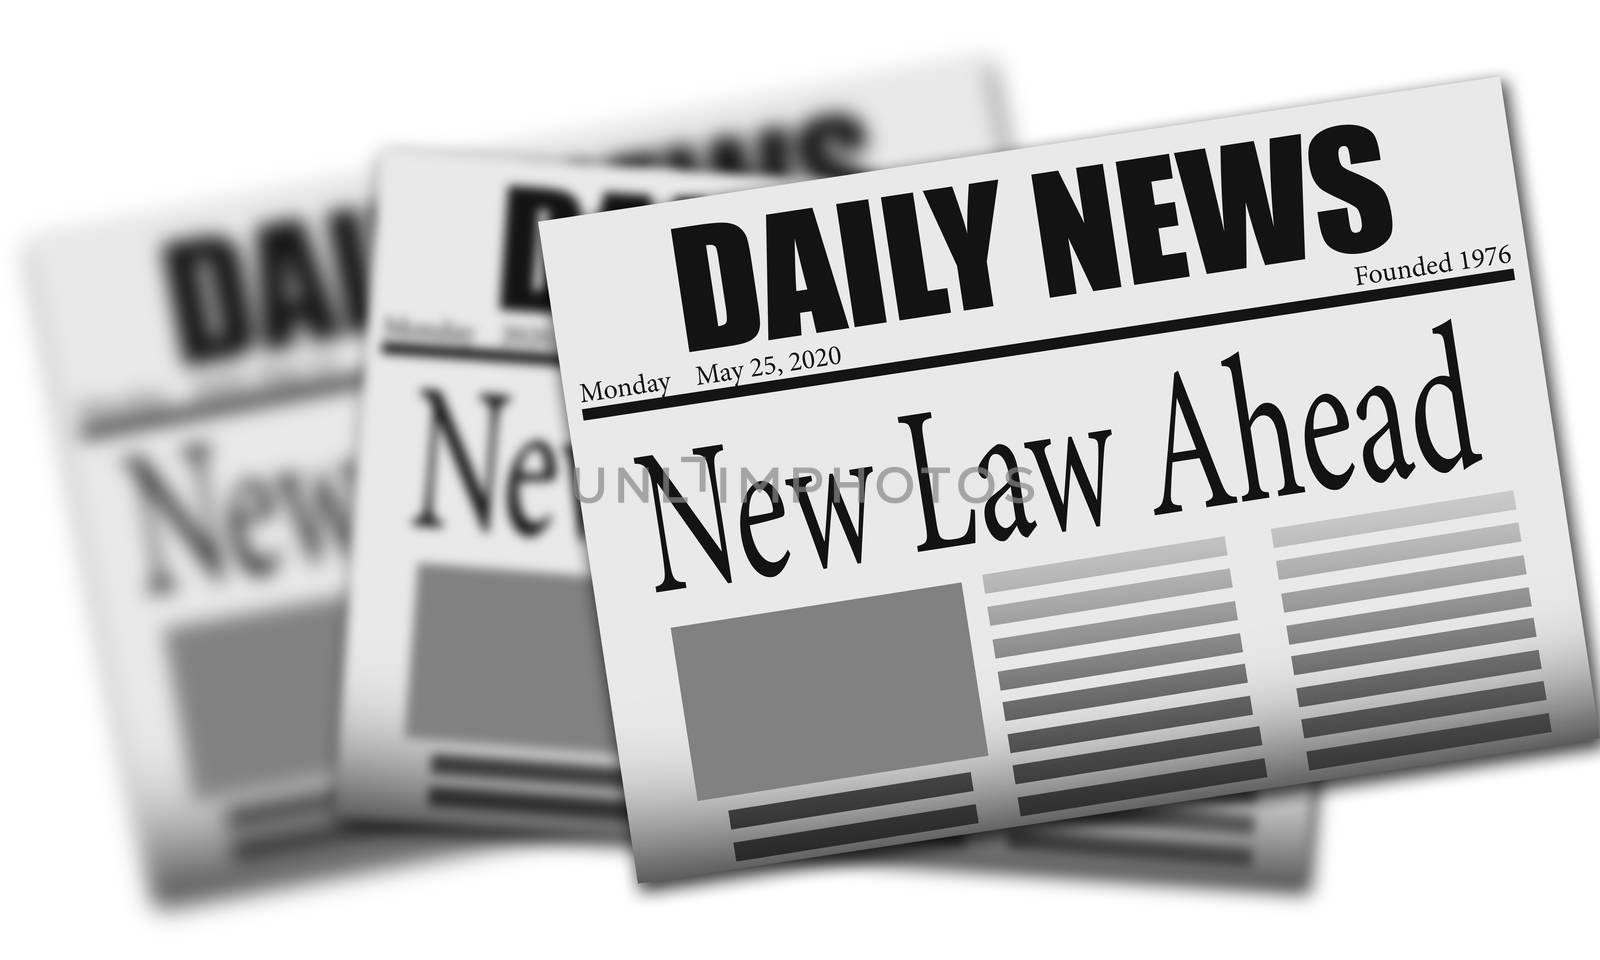 New law take effect as newspaper headline, 3d rendering